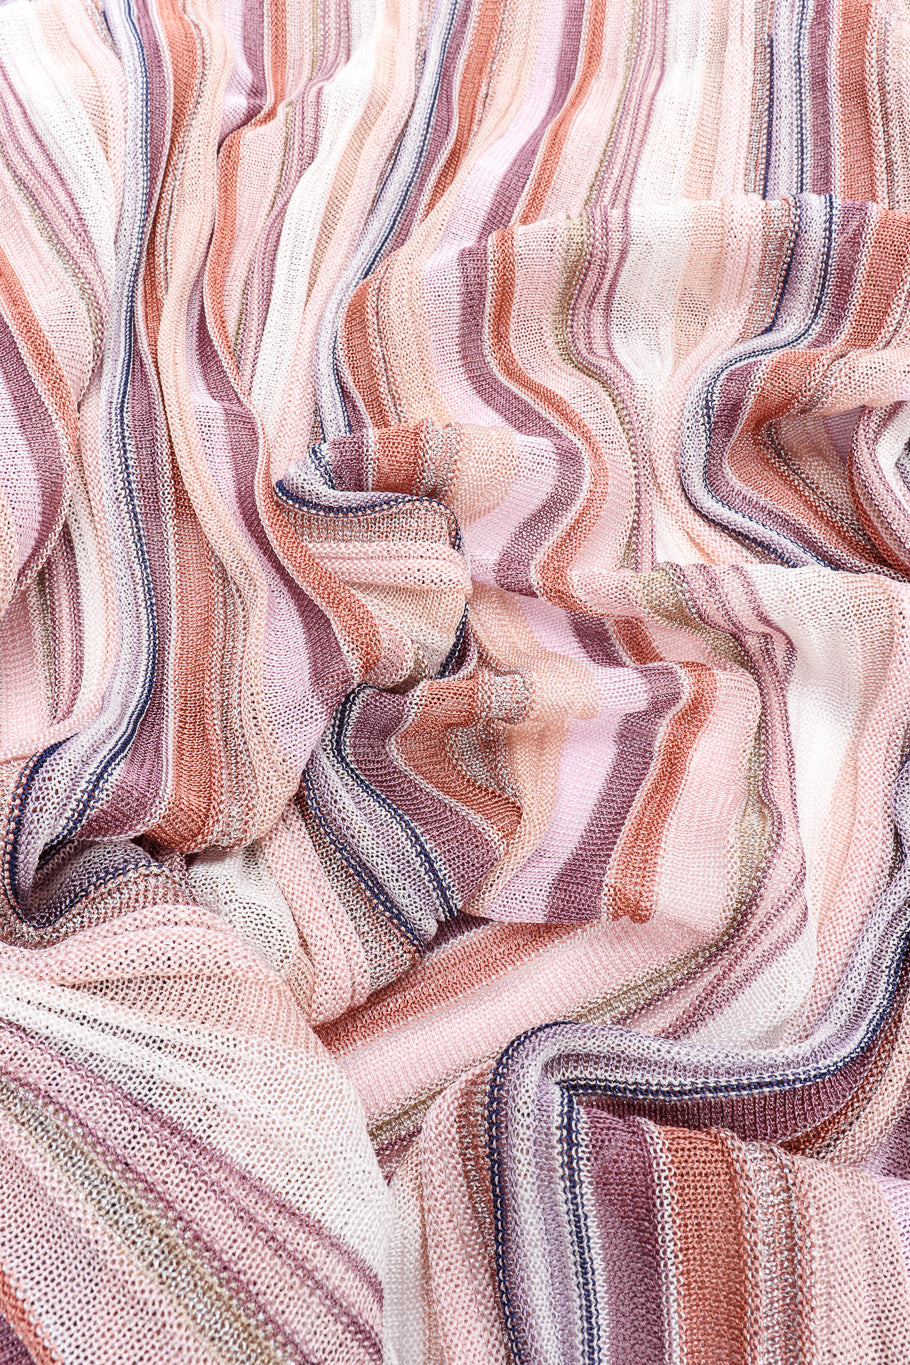 Missoni Striped Knit Duster, Tank, and Pants Set duster fabric closeup @Recessla